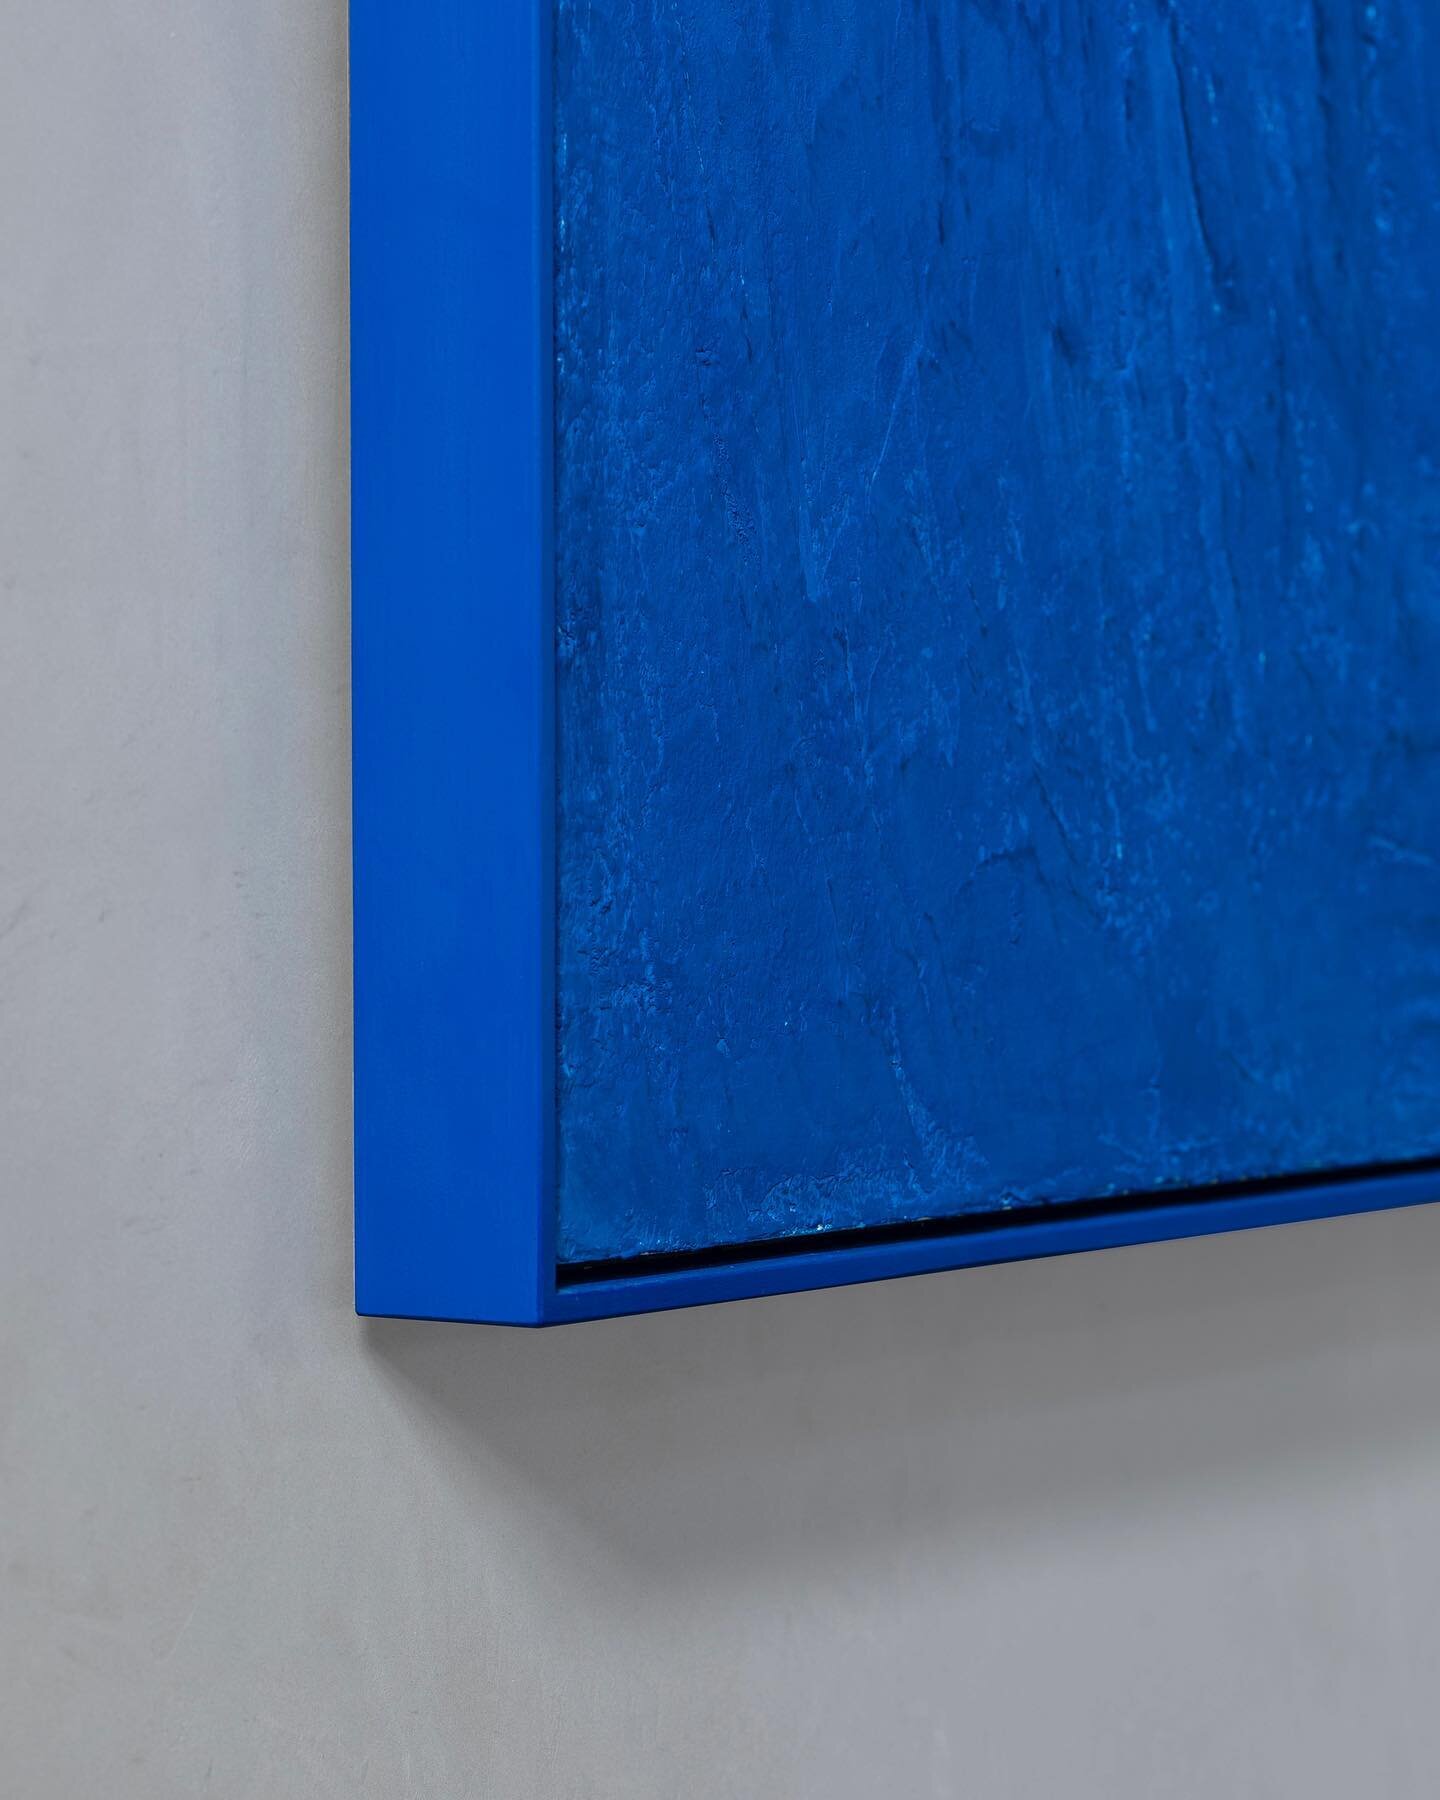 Blue on Blue on Blue @src2_art 

Captured by @courtneykingphoto 
Framed by friend @fallon.frames 

#src2 #src2art